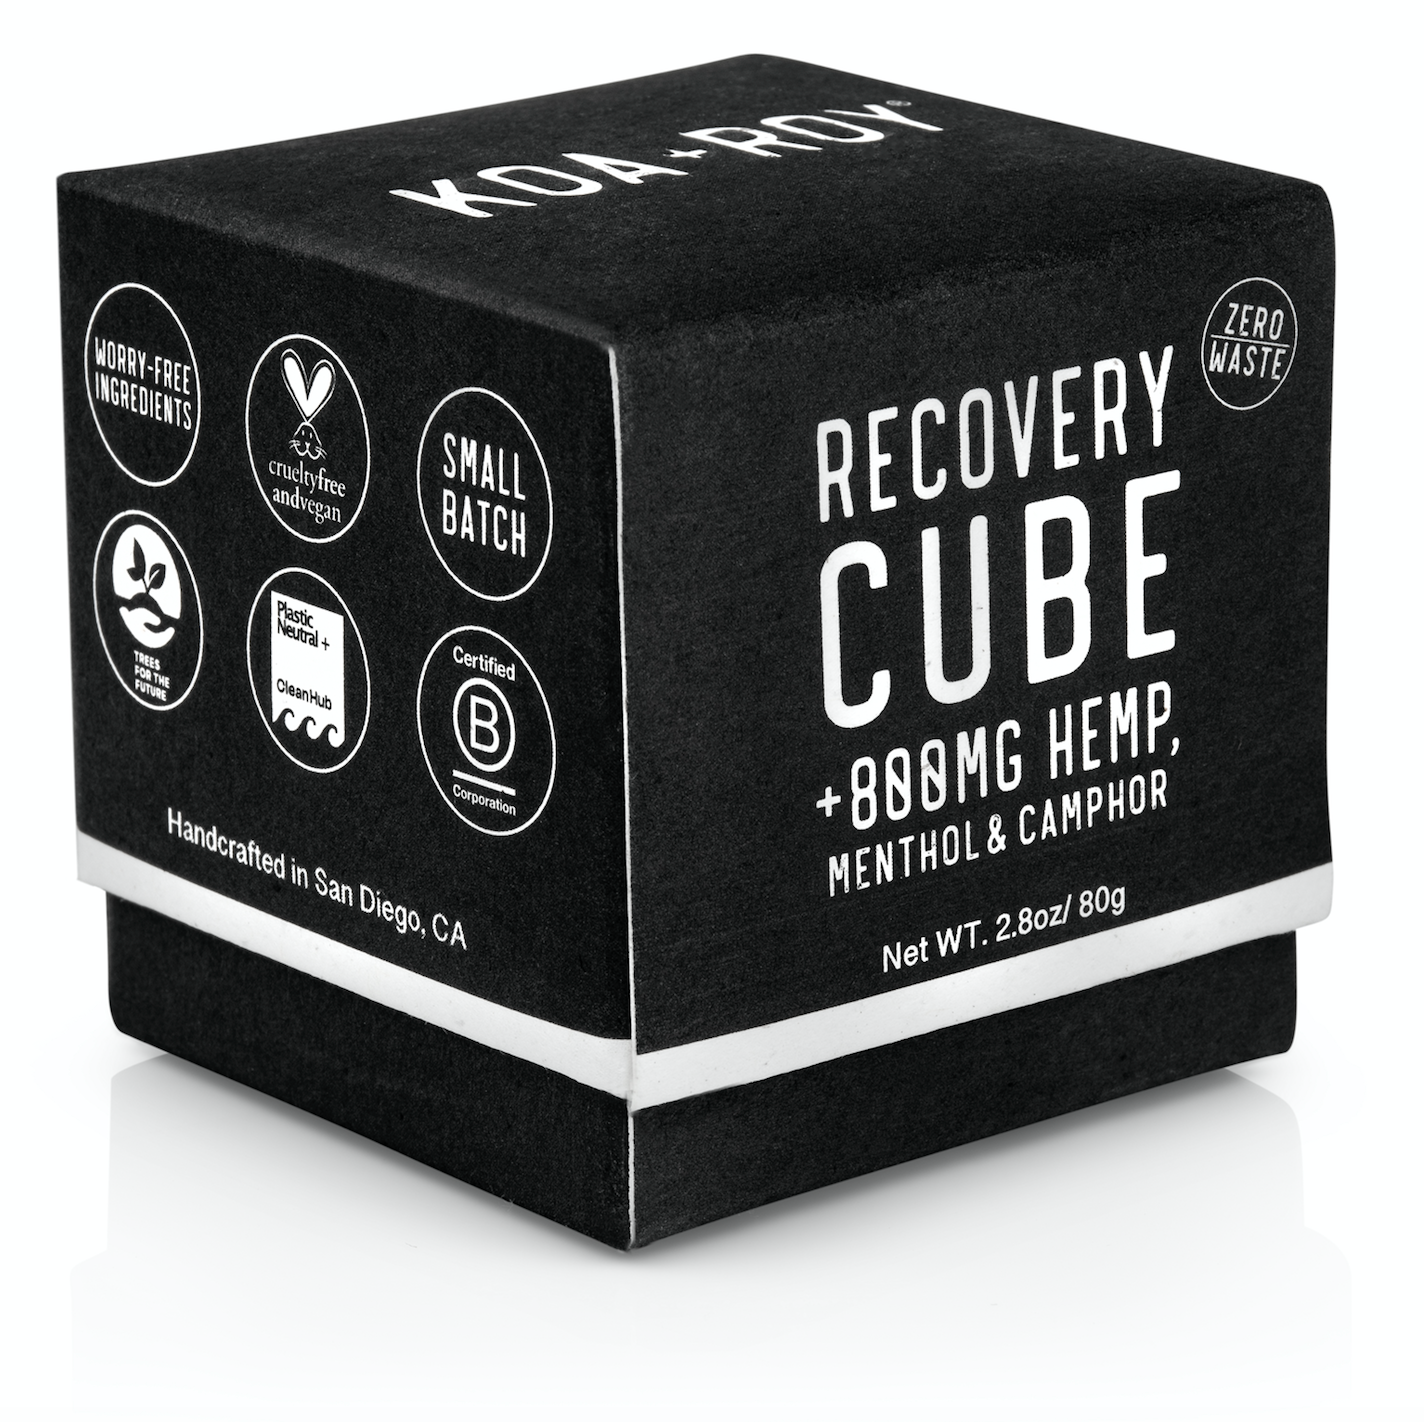 Recovery Cube + CBD Menthol & Camphor Zero Waste B Corp Cruelty free and vegan small batch